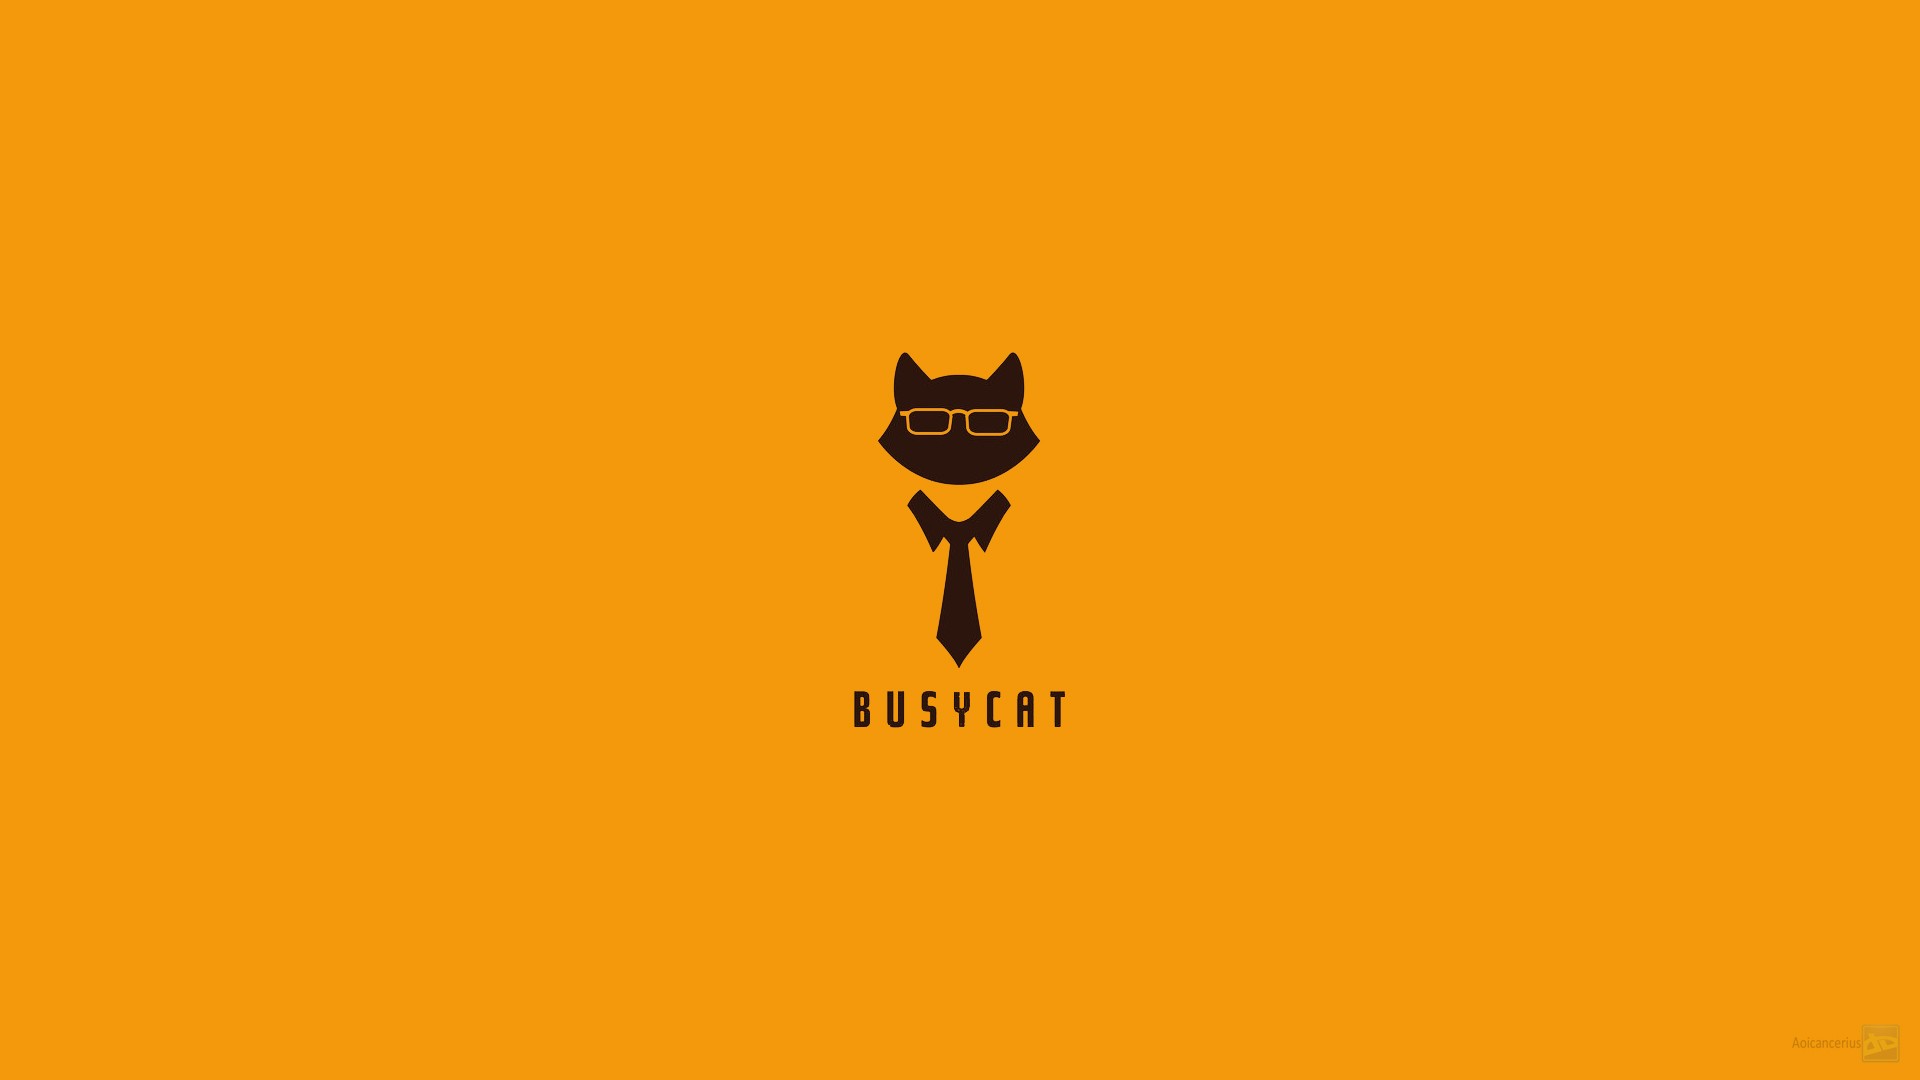 General 1920x1080 poster Business Cat minimalism orange background simple background tie cats artwork